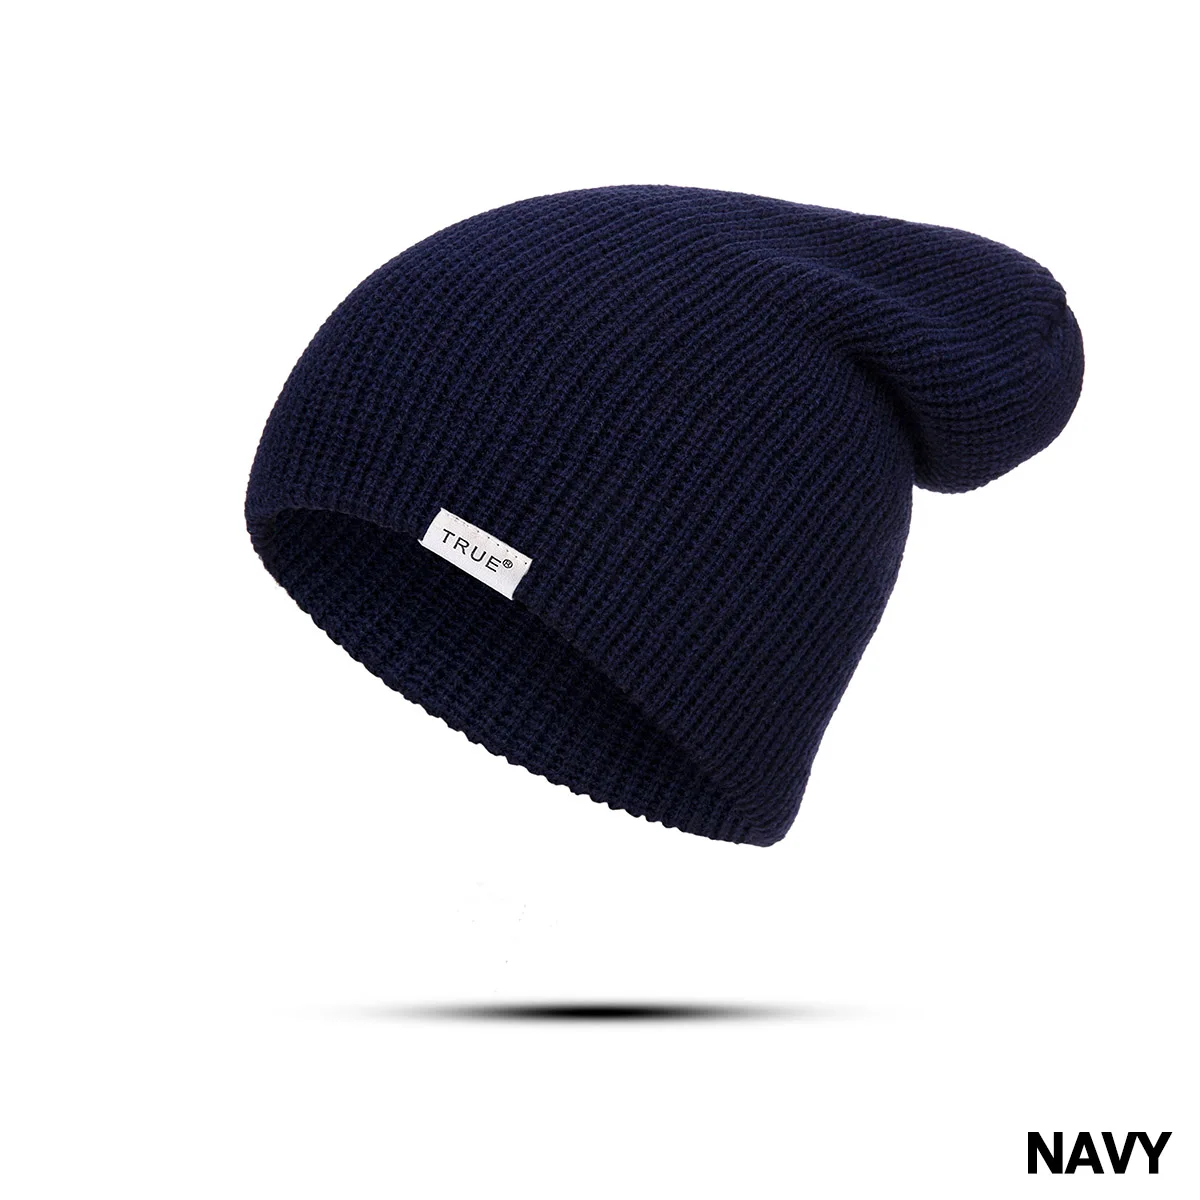 Женская зимняя шапка, Повседневная вязаная одноцветная Мужская Осенняя хип-хоп шапка Skullies, зимняя теплая одежда, шапка, аксессуары - Цвет: navy